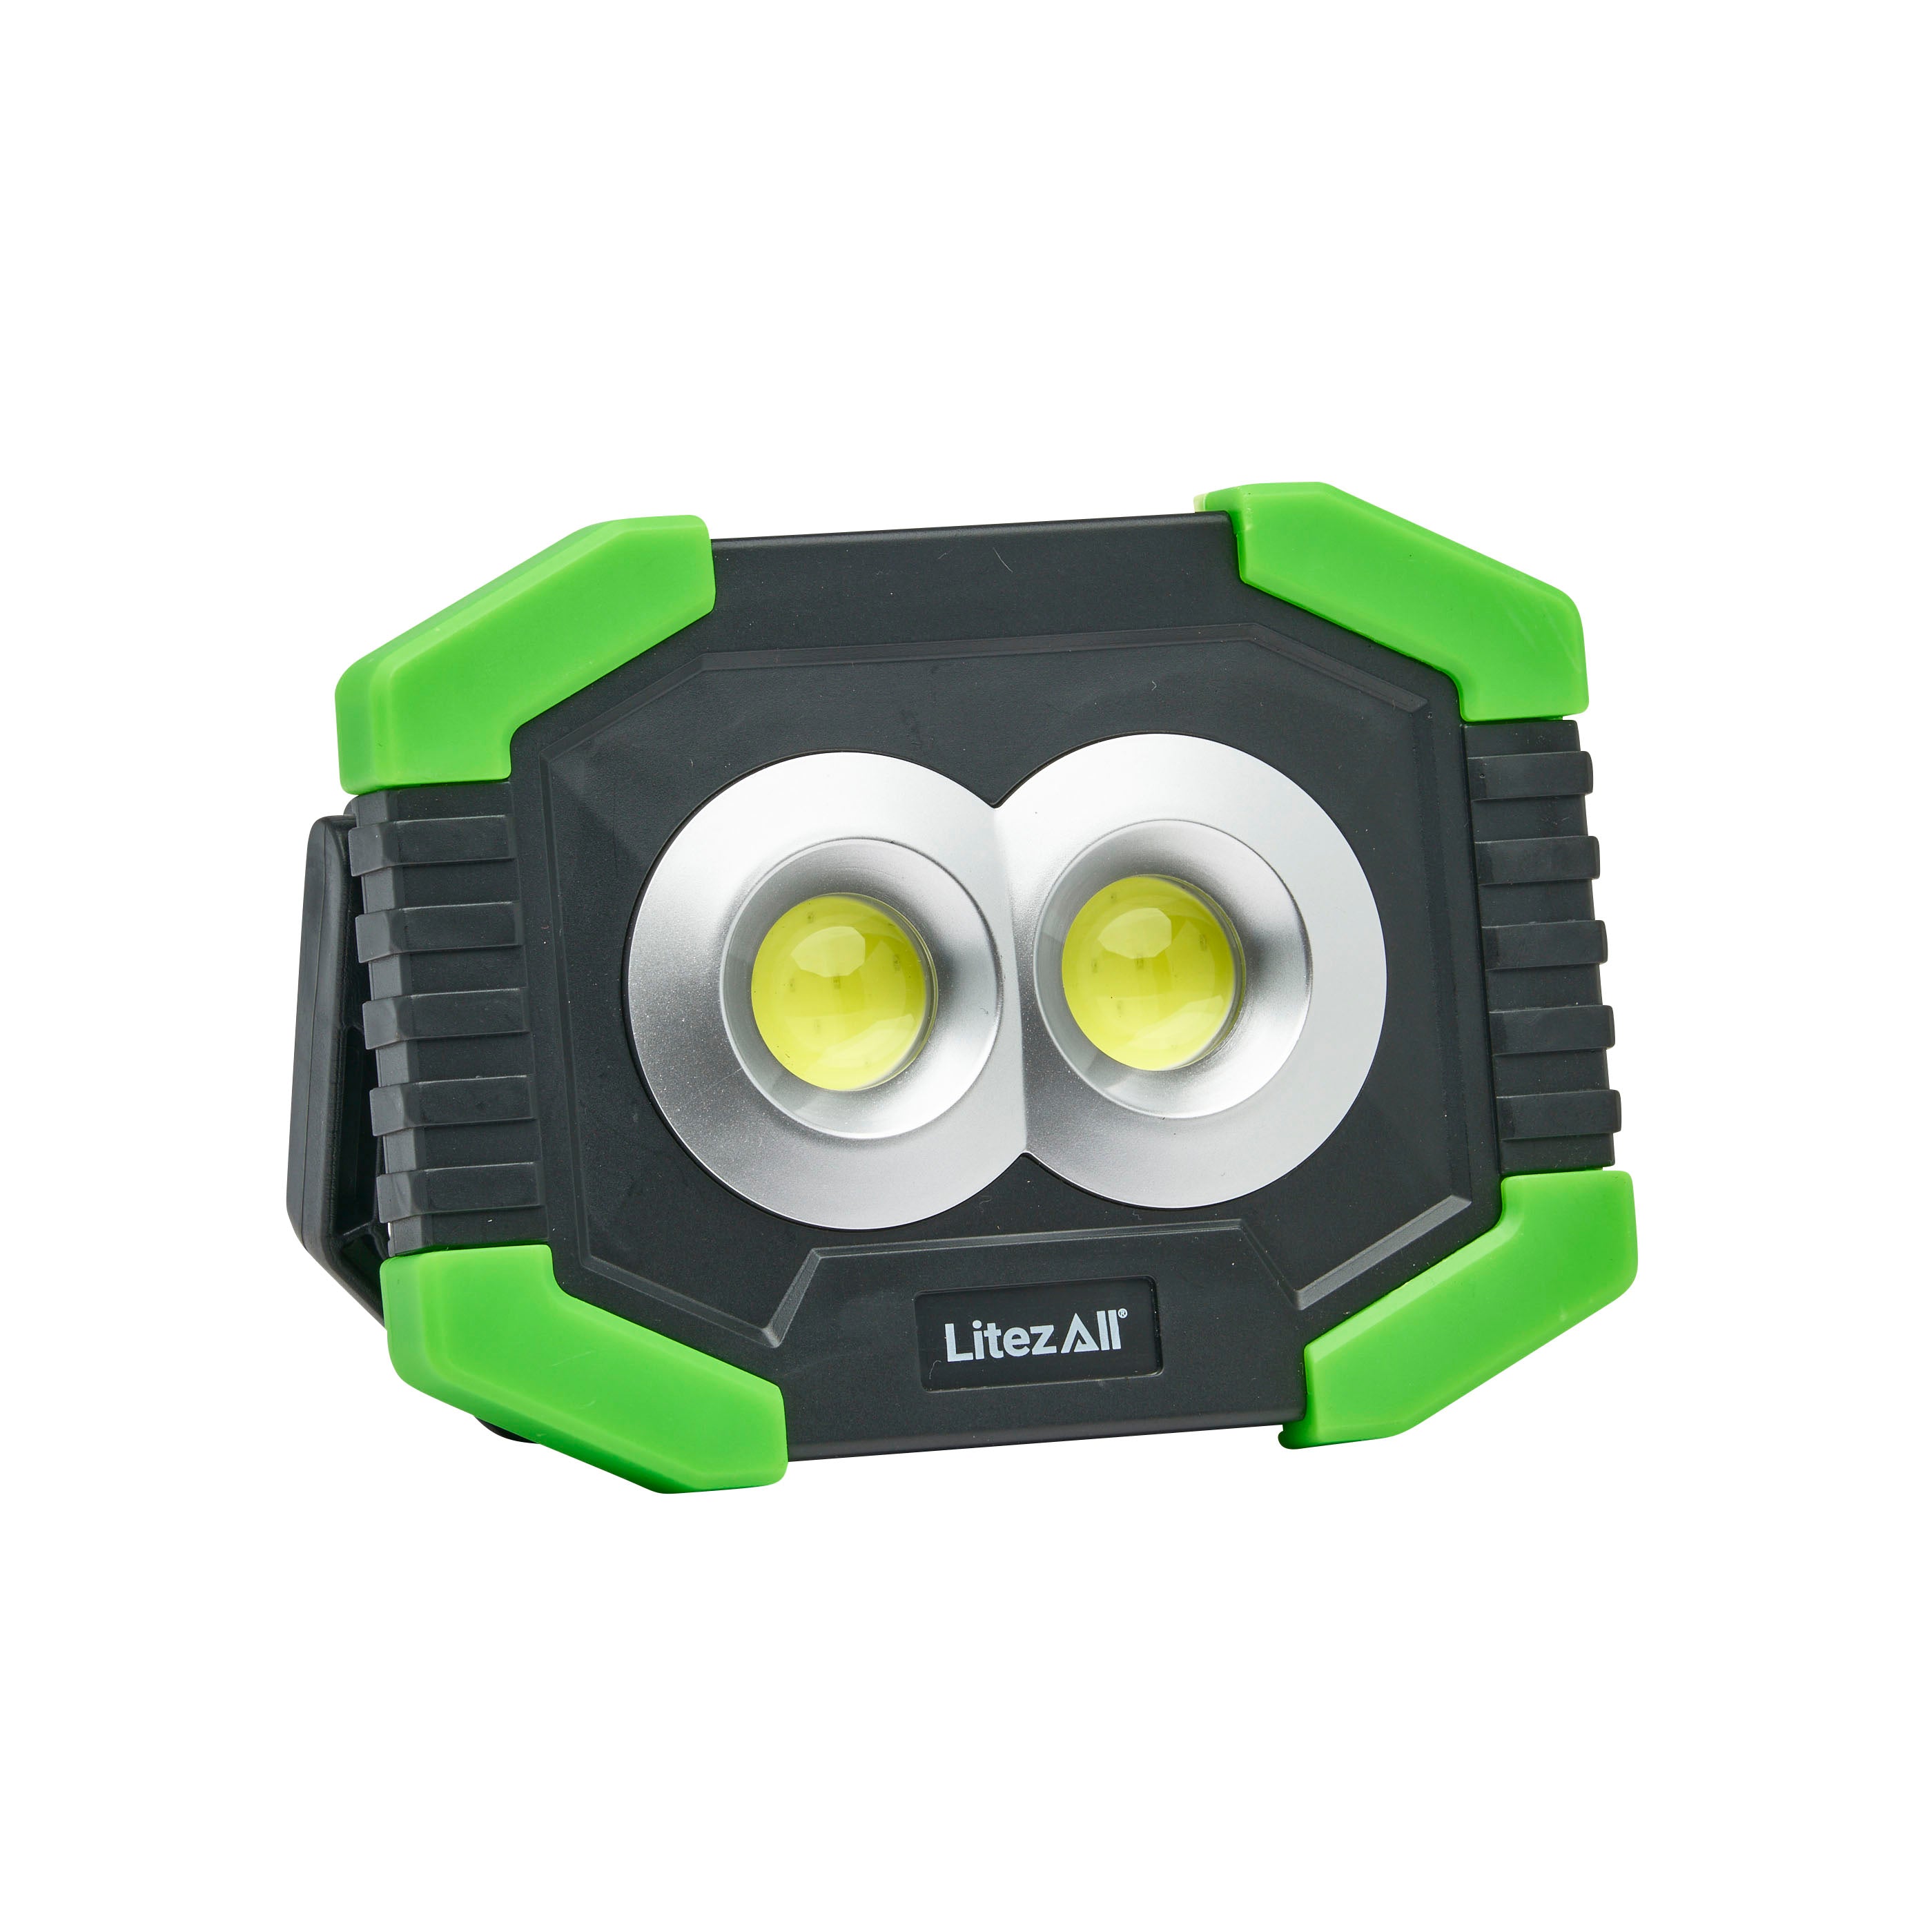 LitezAll 200 Lumen Work Light with Flashlight - LitezAll - Work Lights - 15